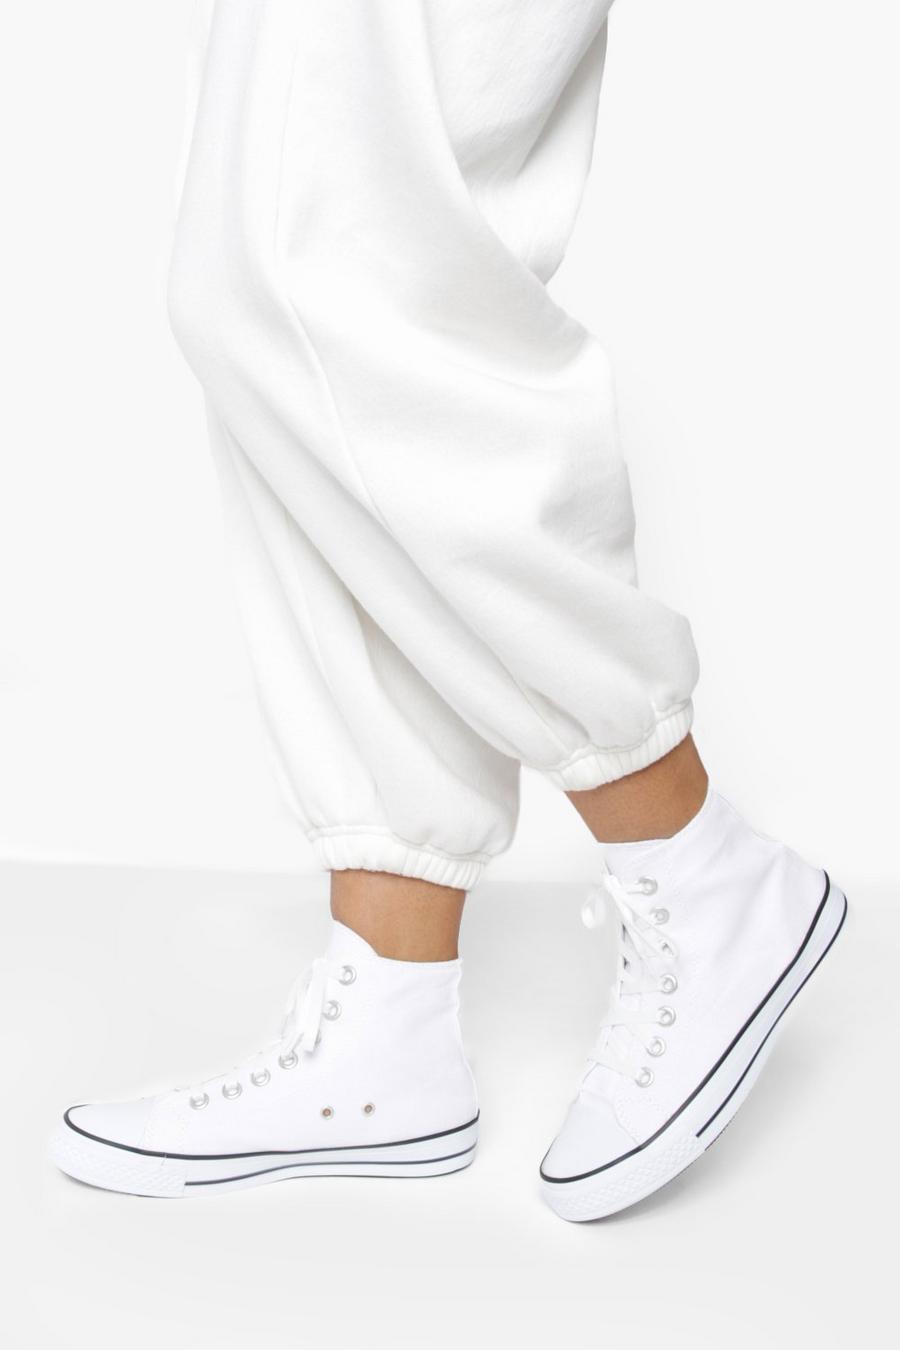 Zapatillas deportivas altas de lona, Blanco white